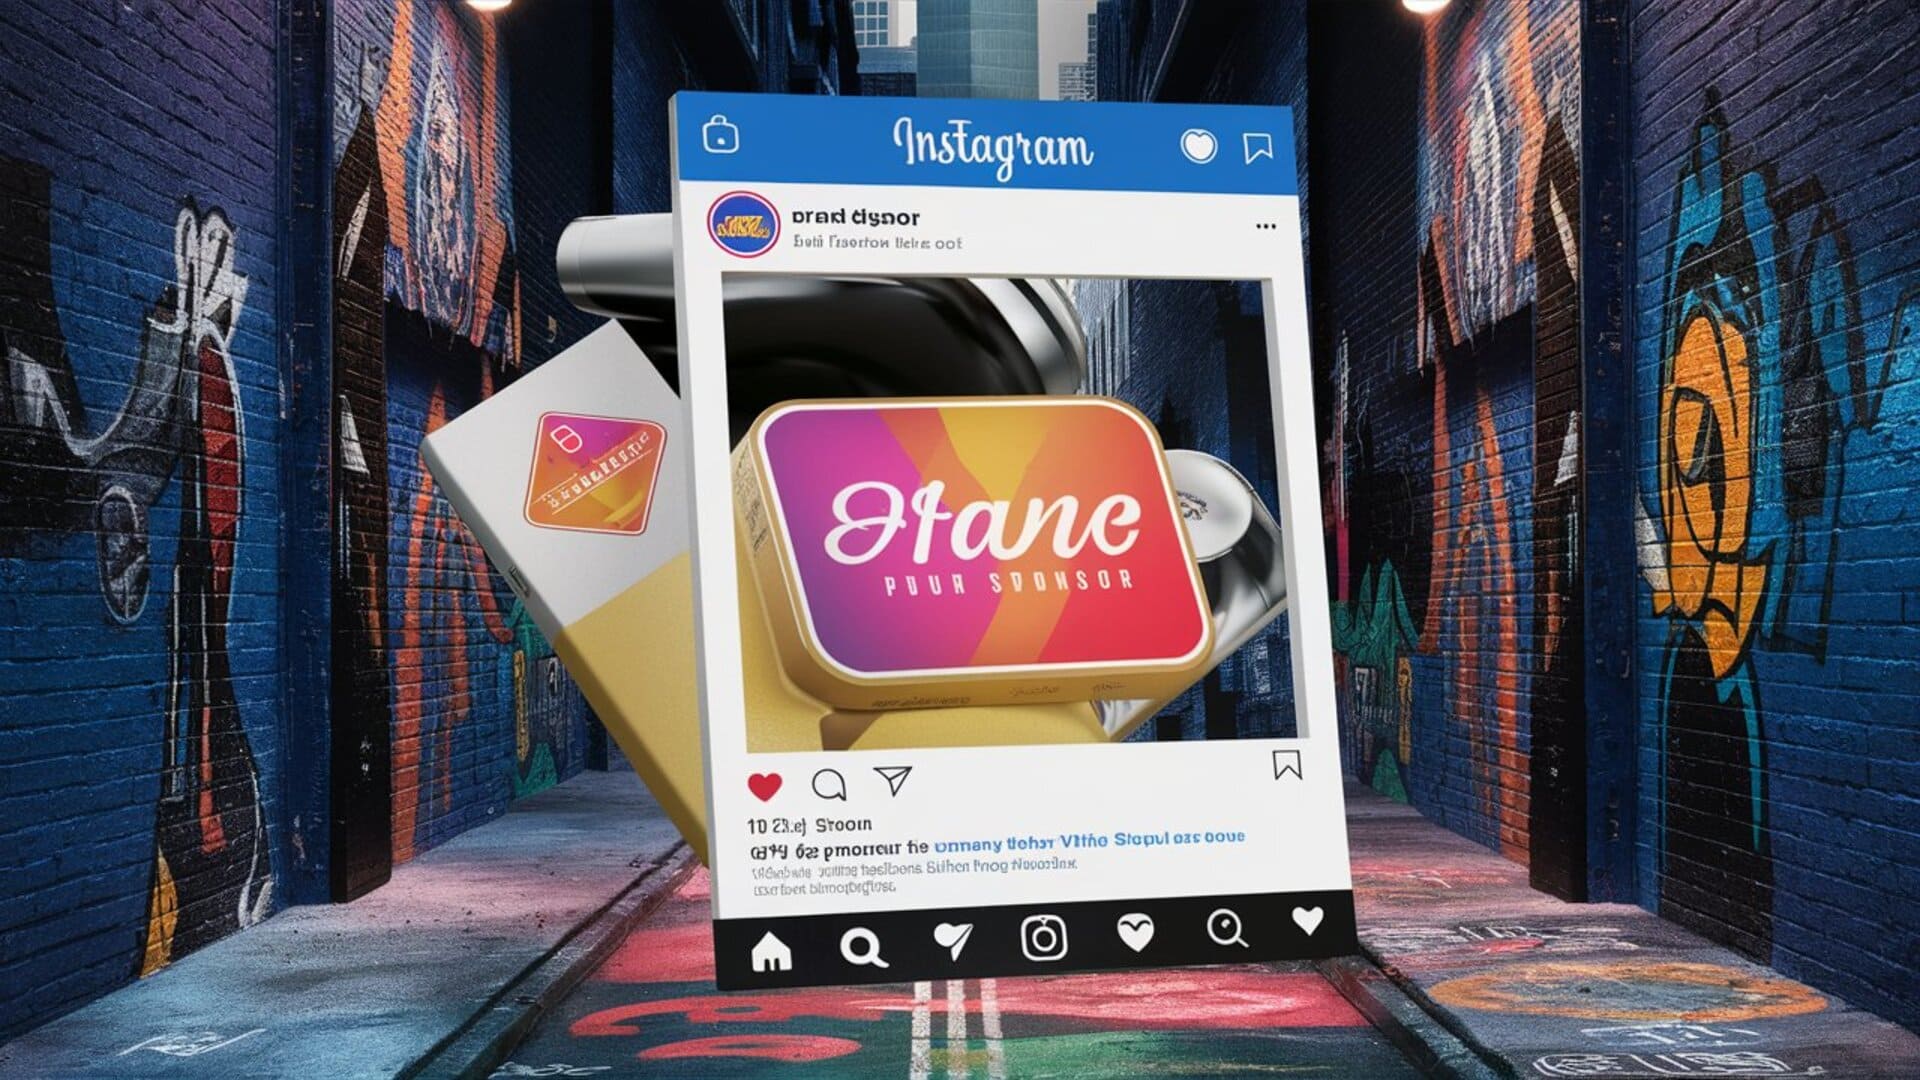 Instagram brand sponsor; Creative Ways To Earn Money From Instagram